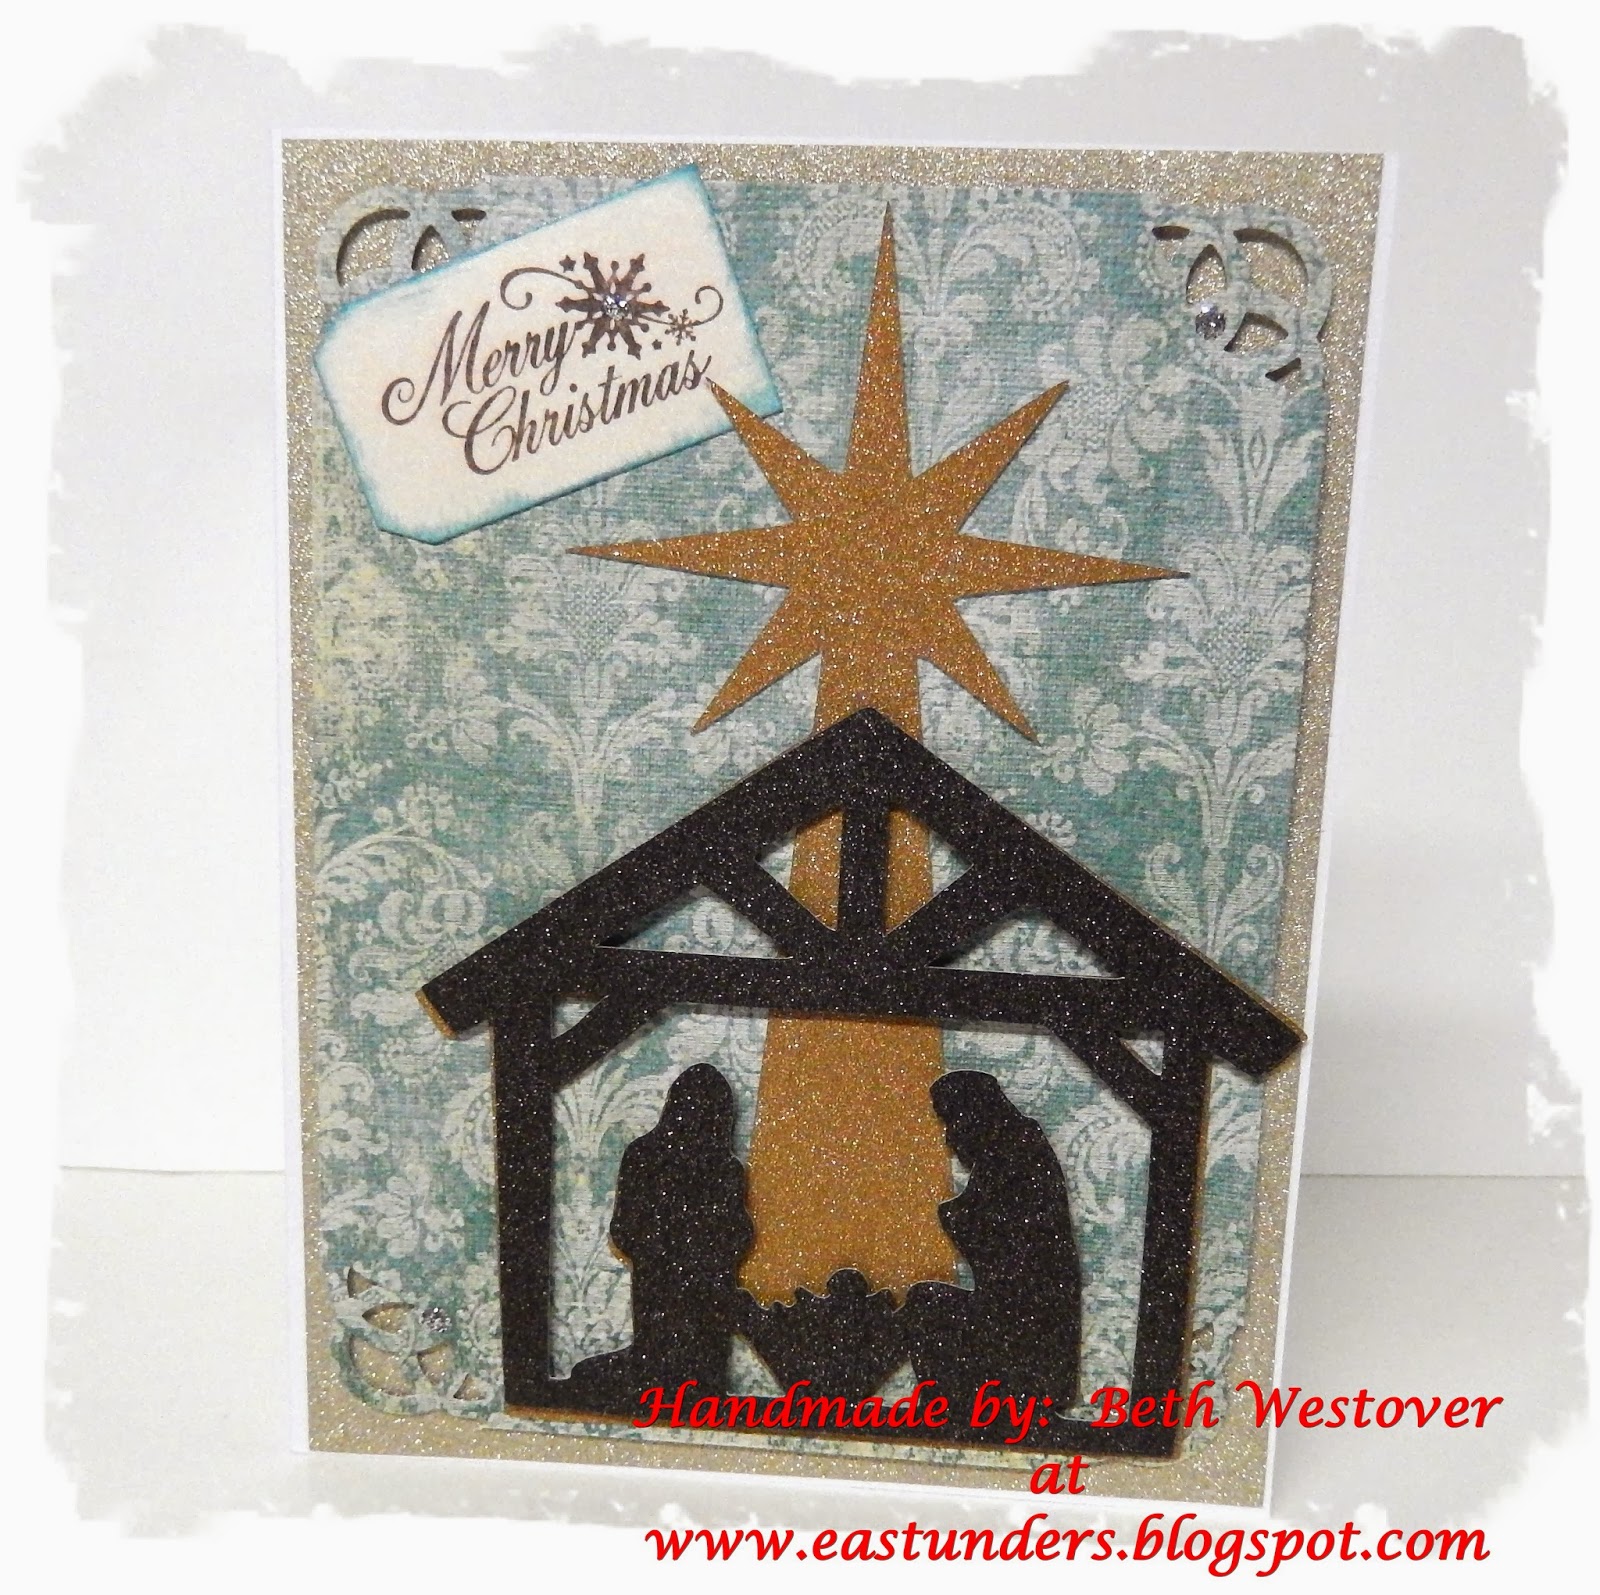 Eastunders Creations: Many Nativity Card Options